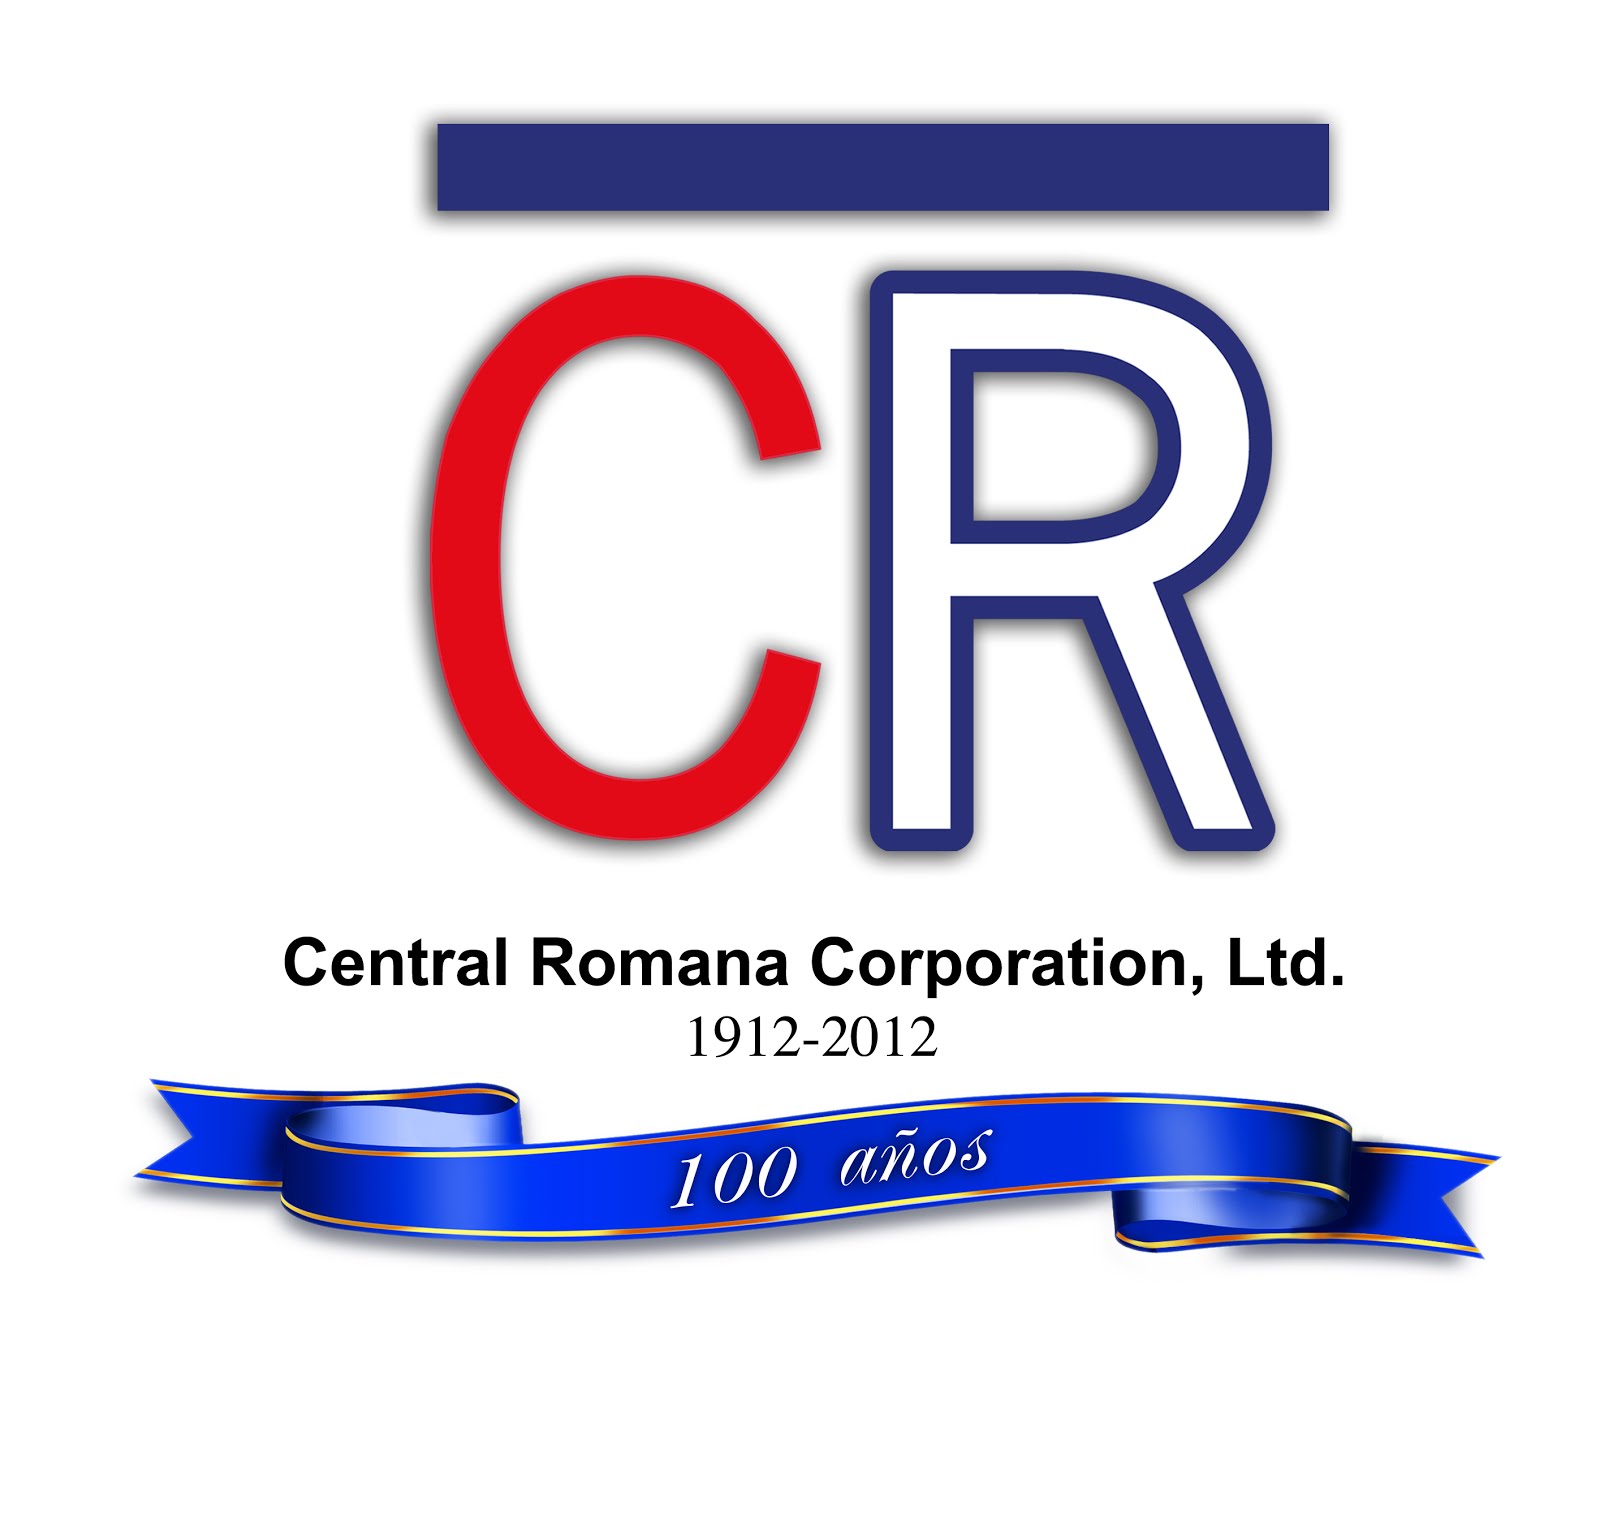 CENTRAL ROMANA CORPORATION